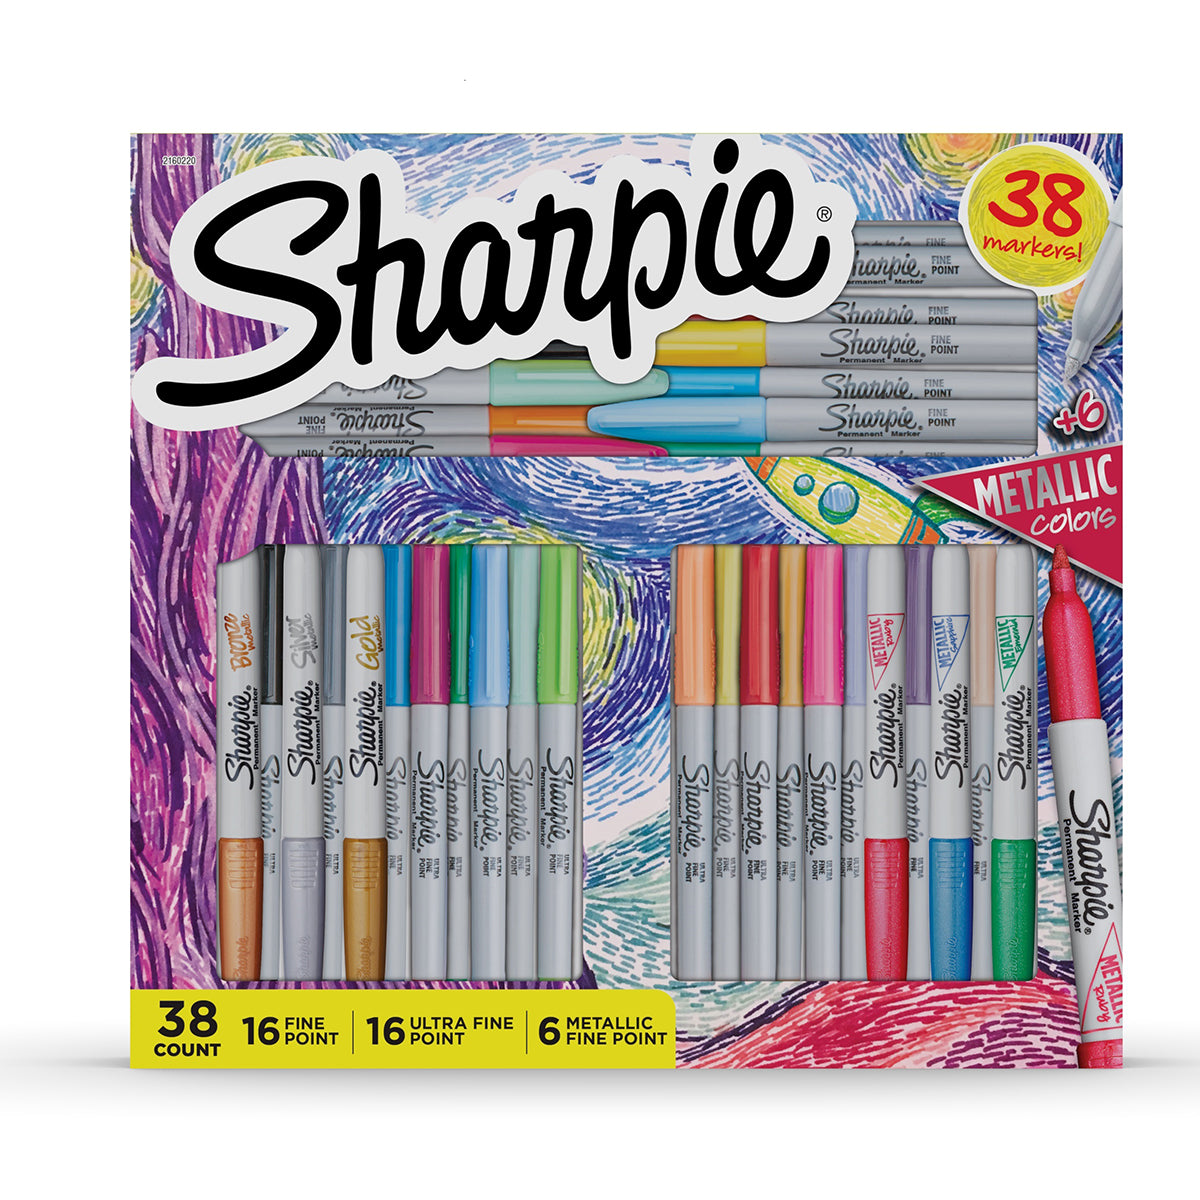 Sharpie Permanent Marker, Chisel Tip, Slate Gray, 1-Count